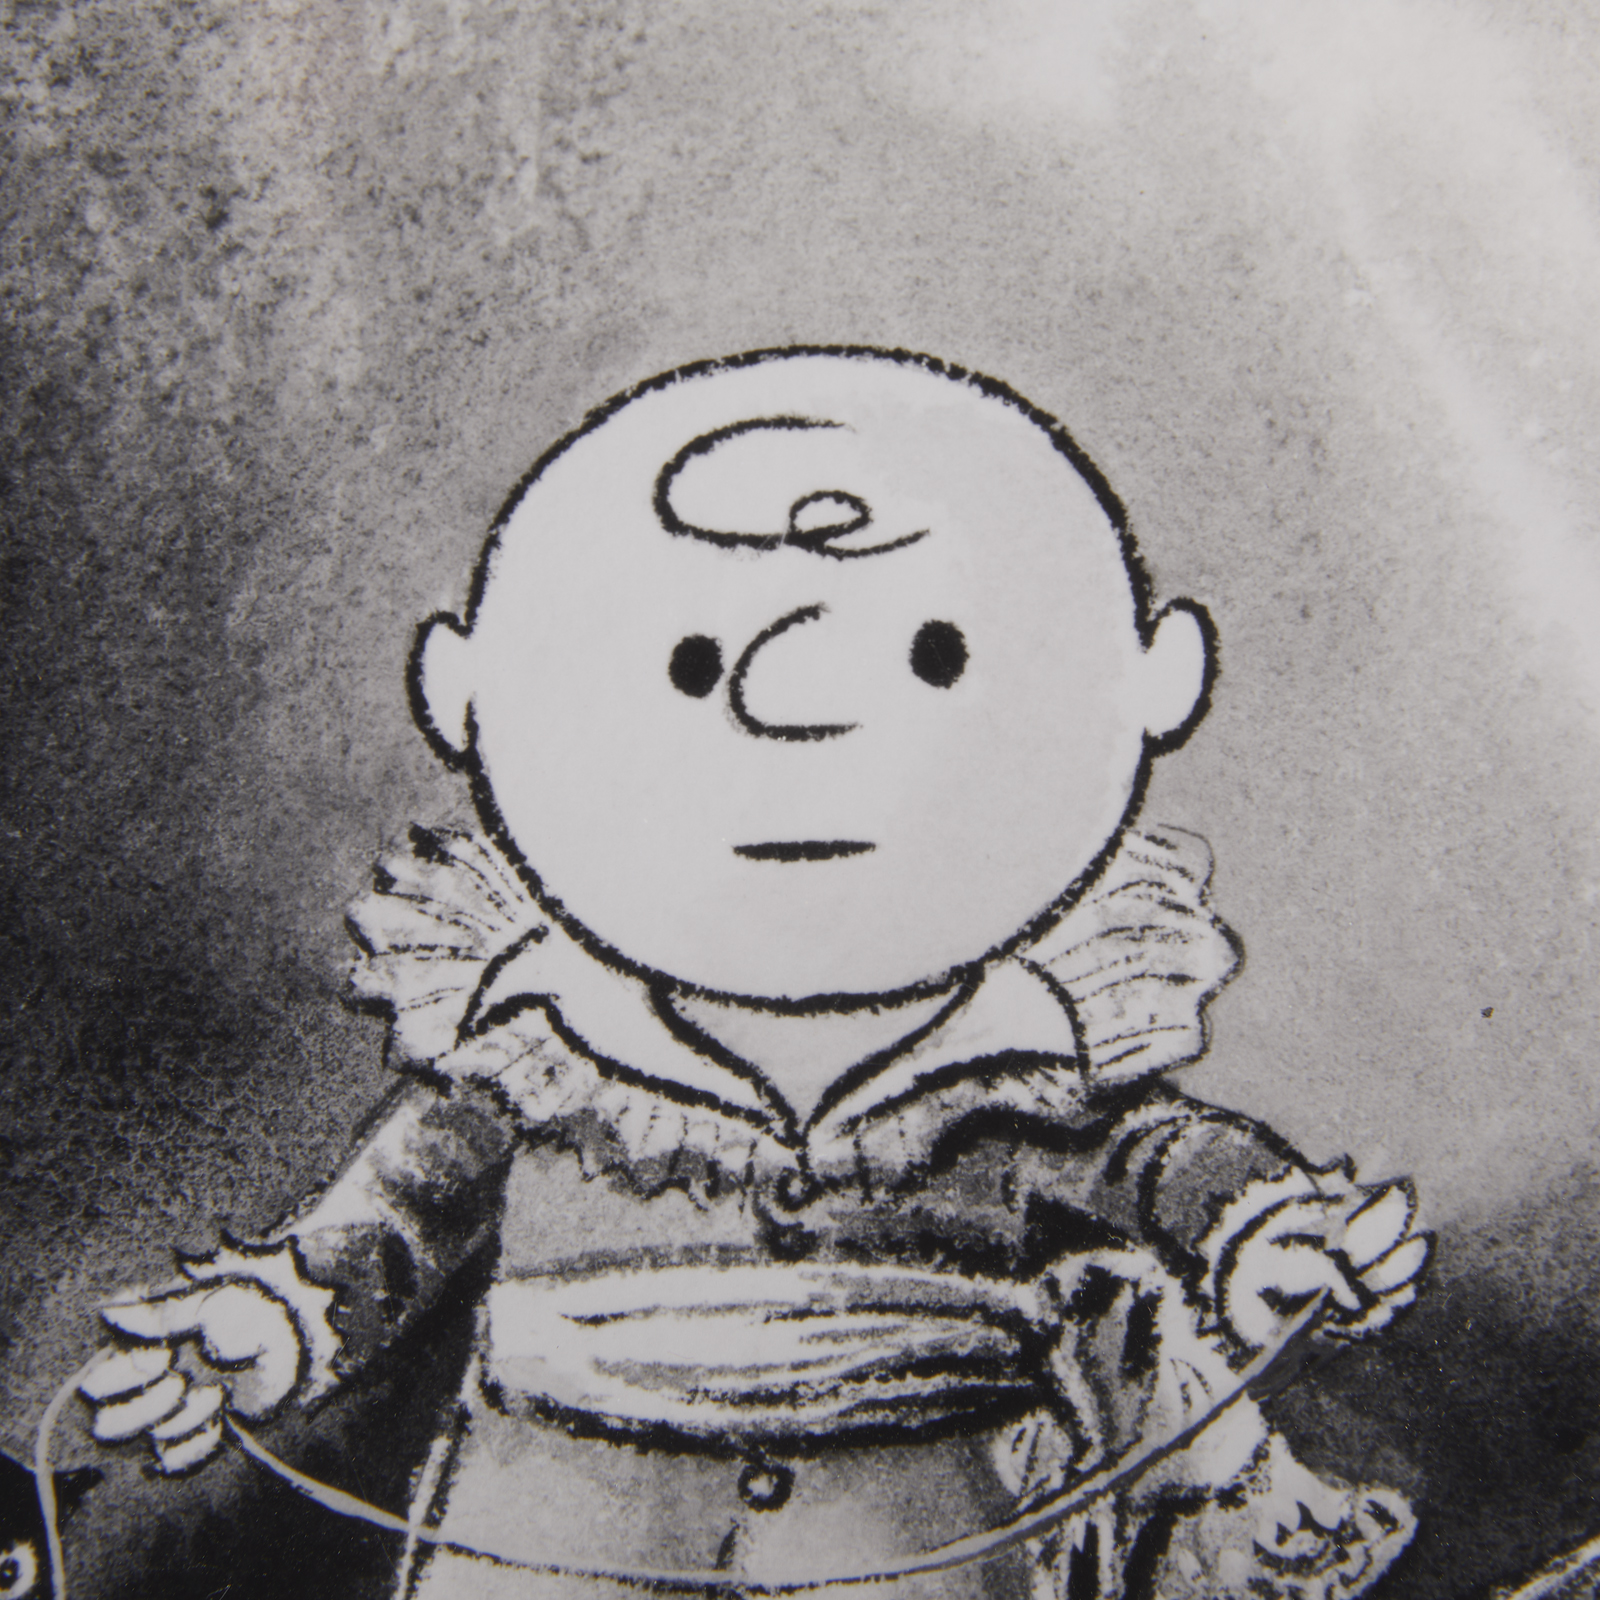 Eldon Dedini "Charlie Brown by Goya" Print - Image 4 of 7